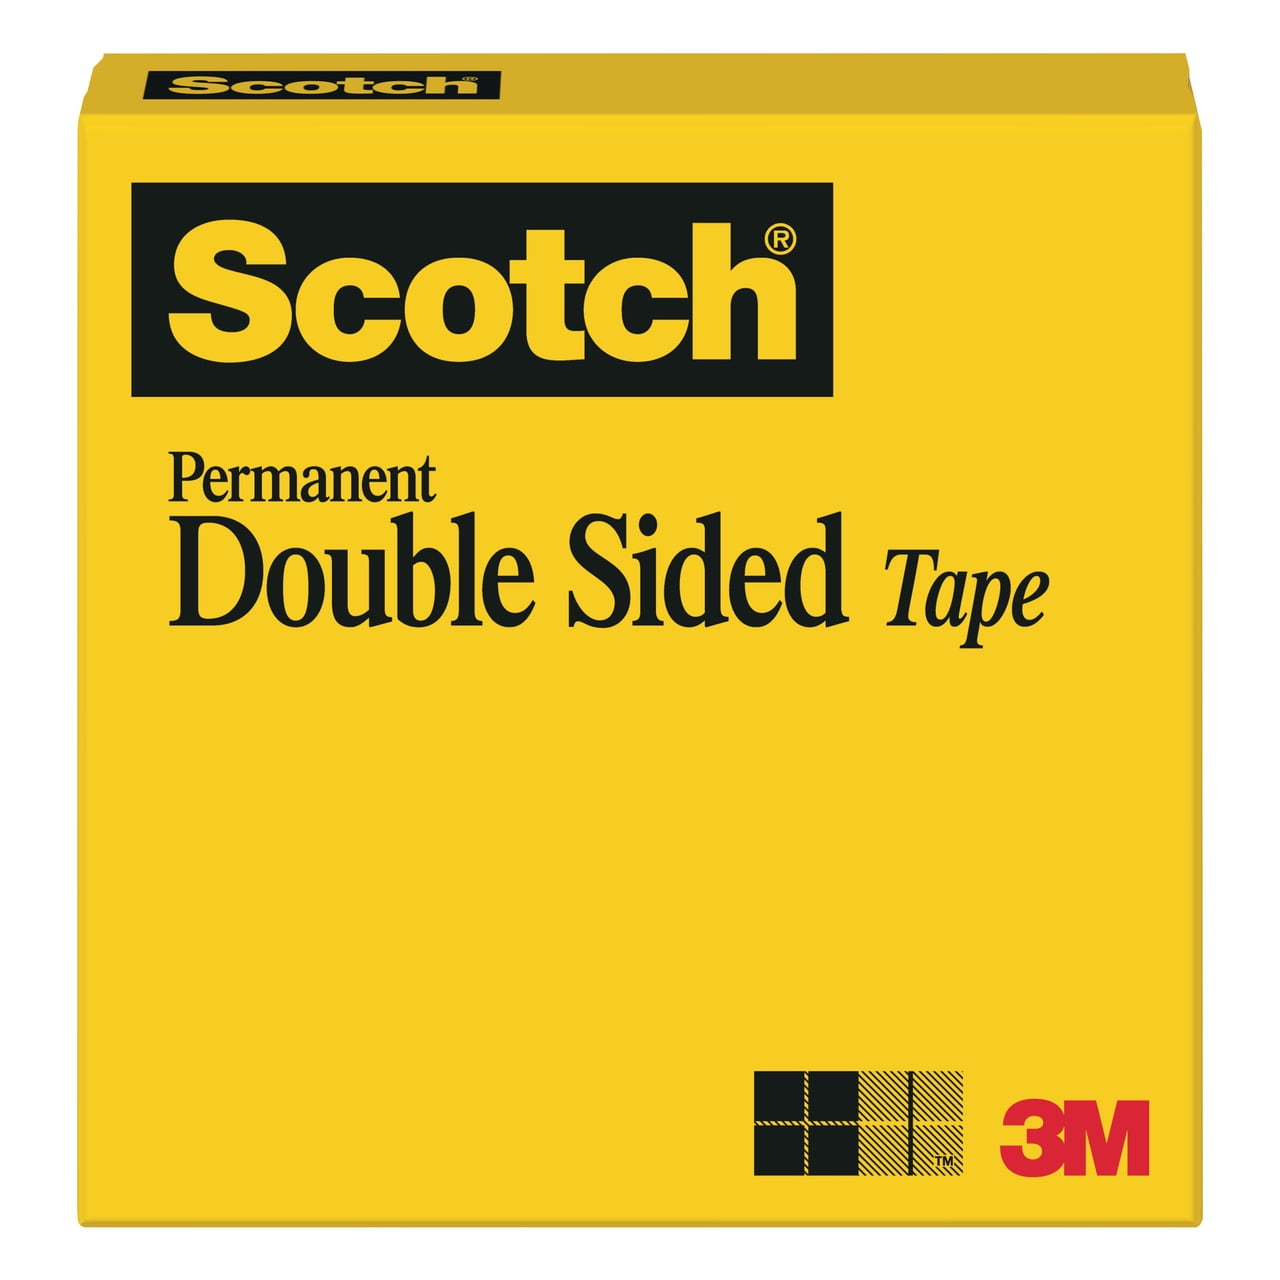 MMM6656PKC40 - Scotch Permanent Double-Sided Tape - 1/2W, MMM 6656PKC40